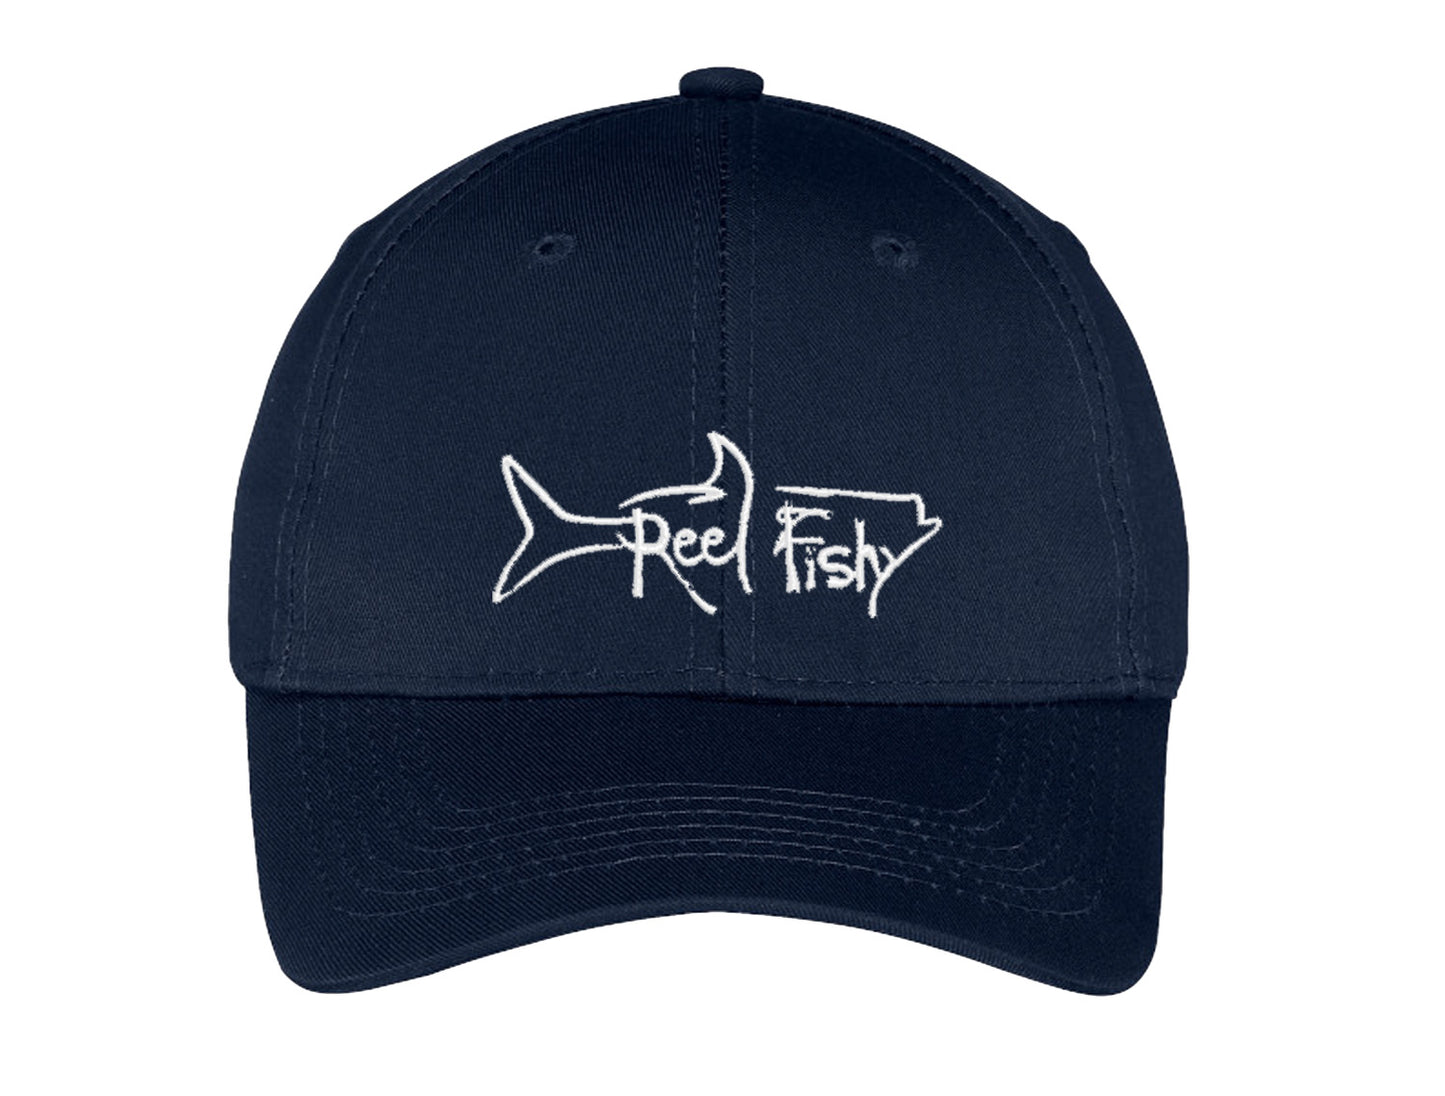 Youth Fishing Hats with Reel Fishy Tarpon Logo - Navy